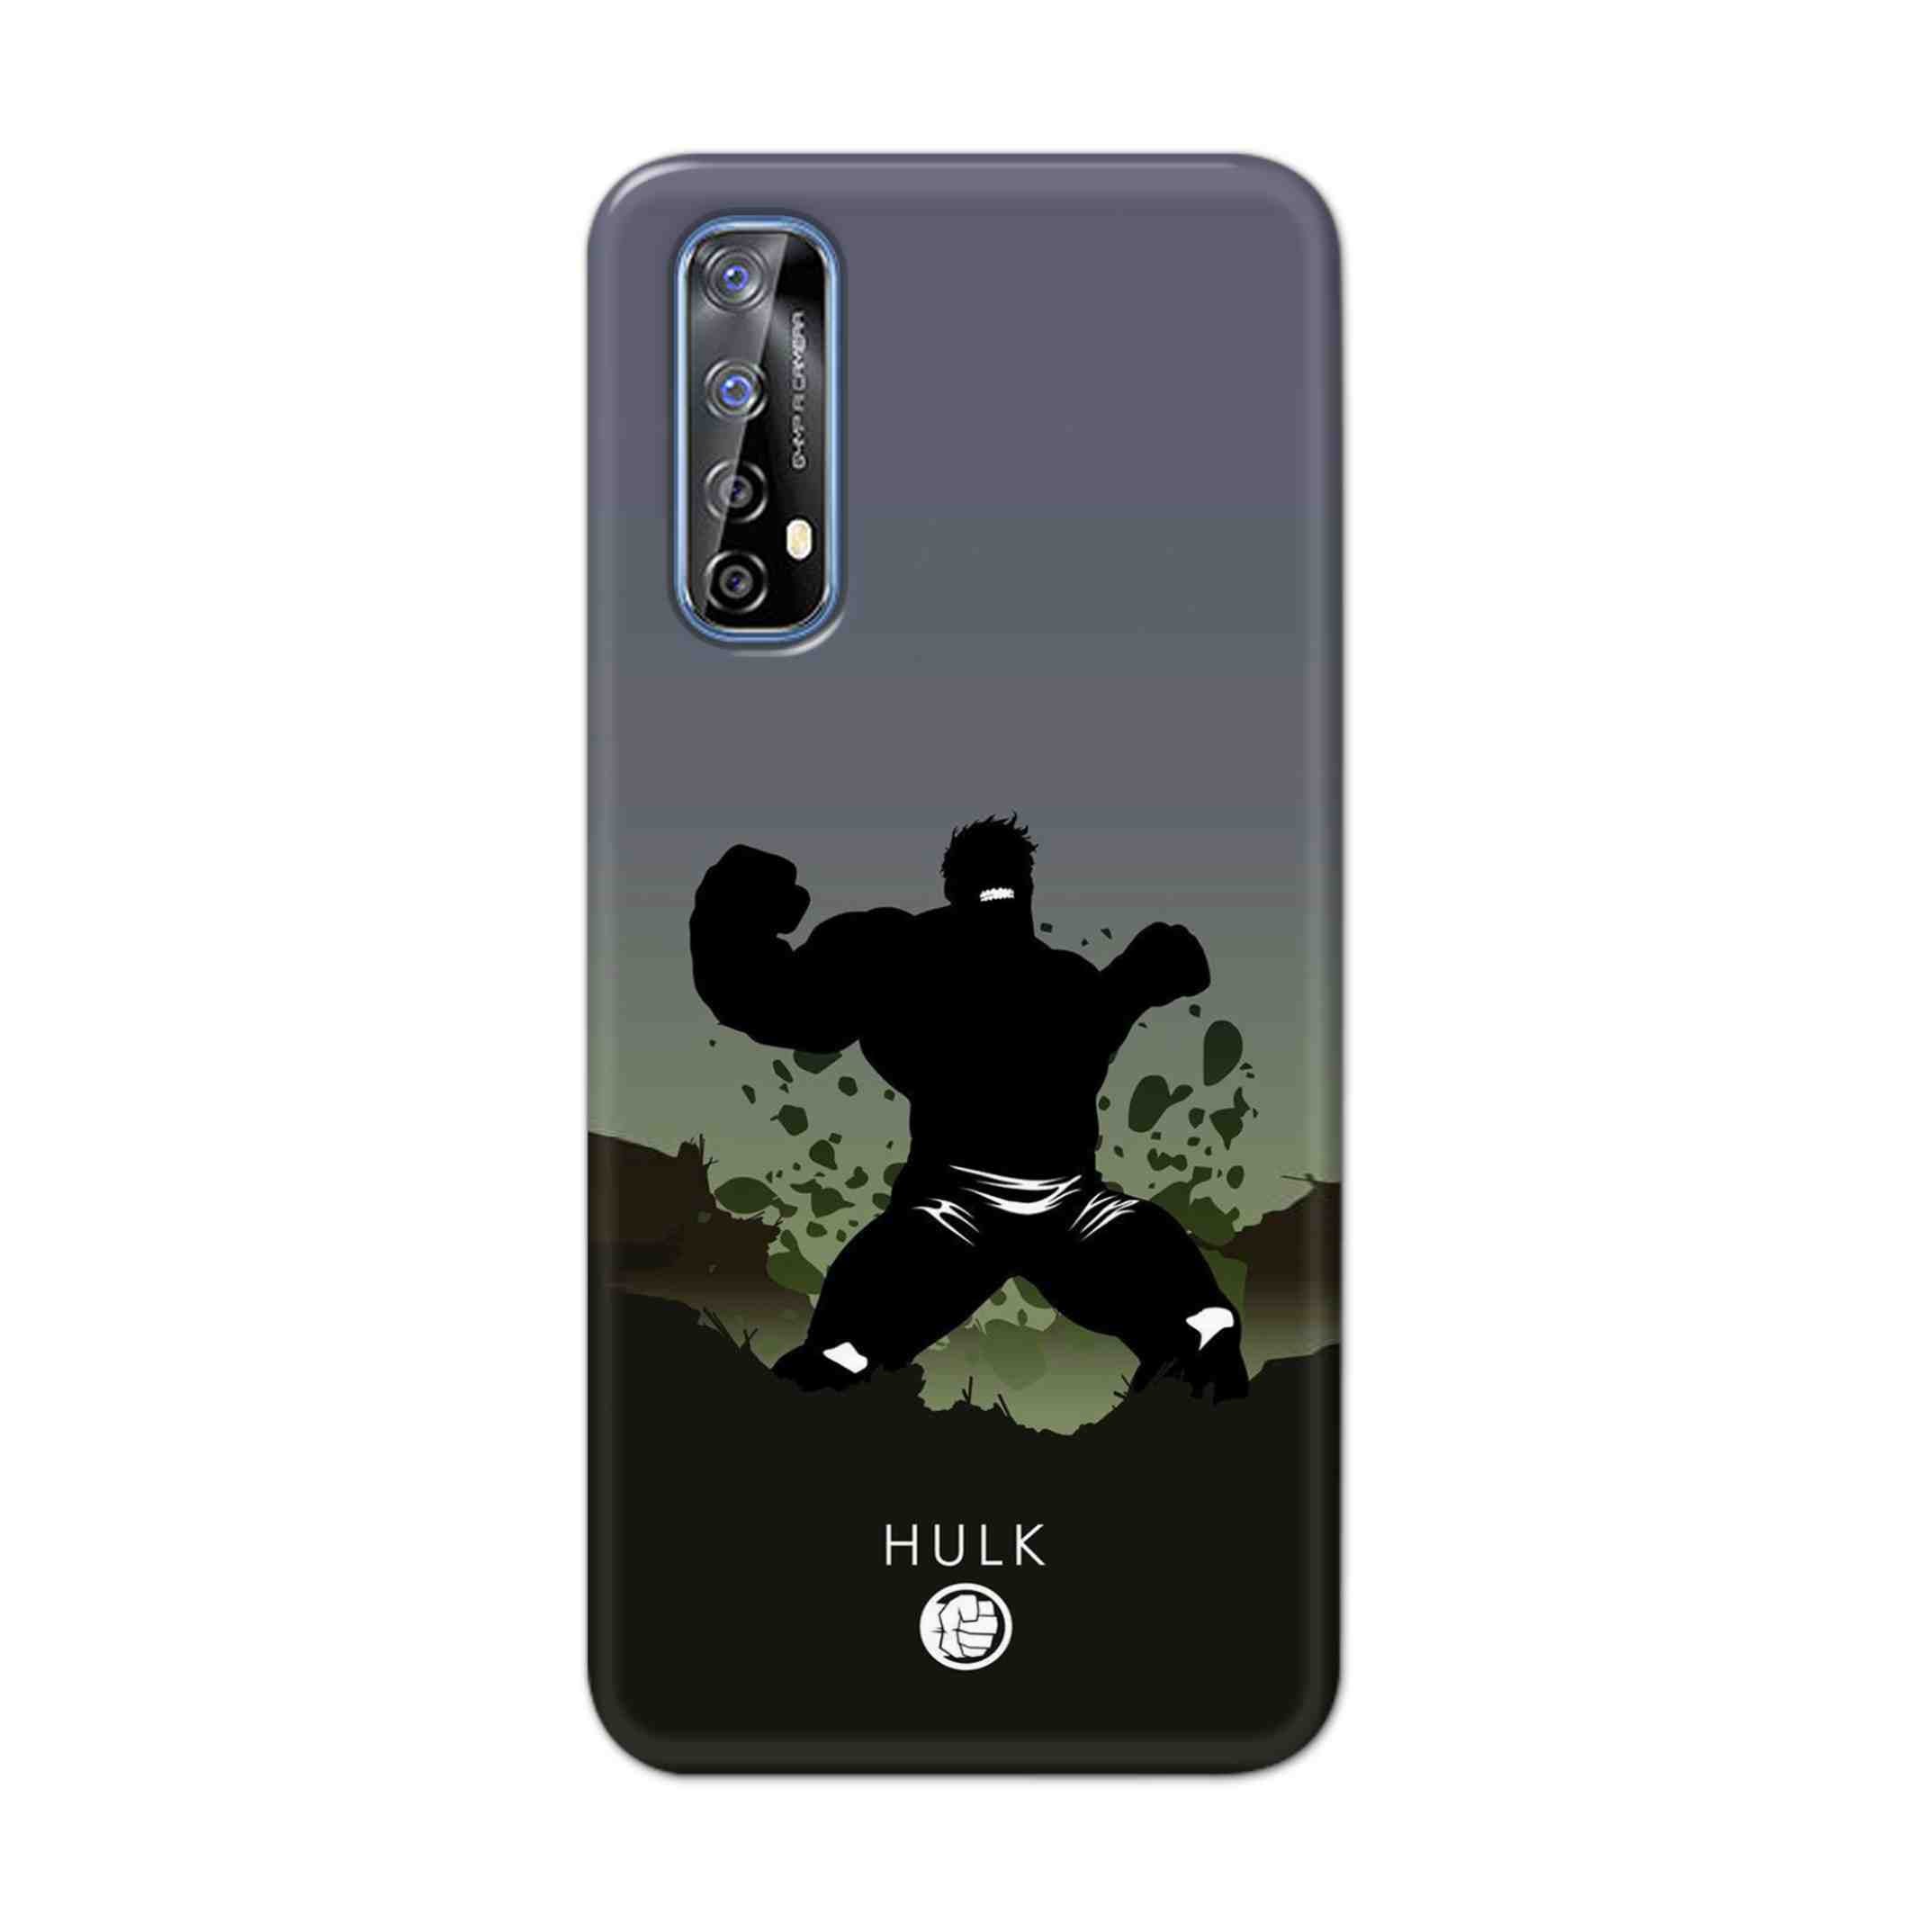 Buy Hulk Drax Hard Back Mobile Phone Case Cover For Realme 7 Online